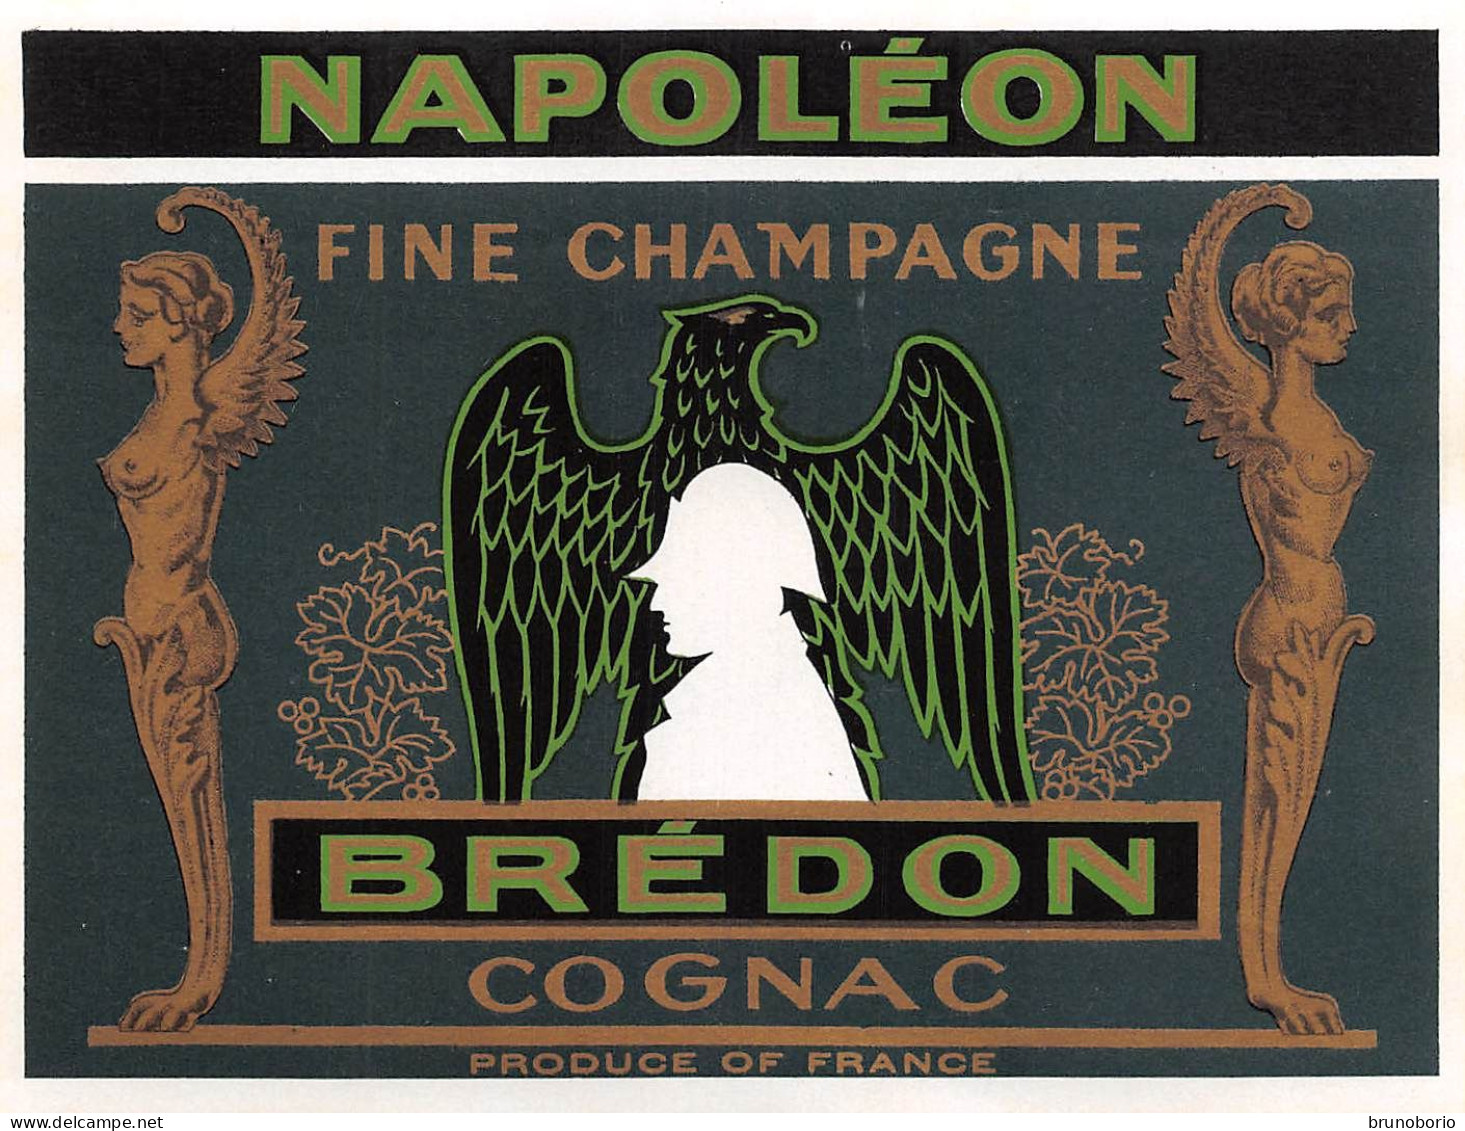 00048 "NAPOLEON FINE CHAMPAGNE - DREDON COGNAC - PRODUCE OF FRANCE" ETICH. ORIG. ANIMATA - Alkohole & Spirituosen